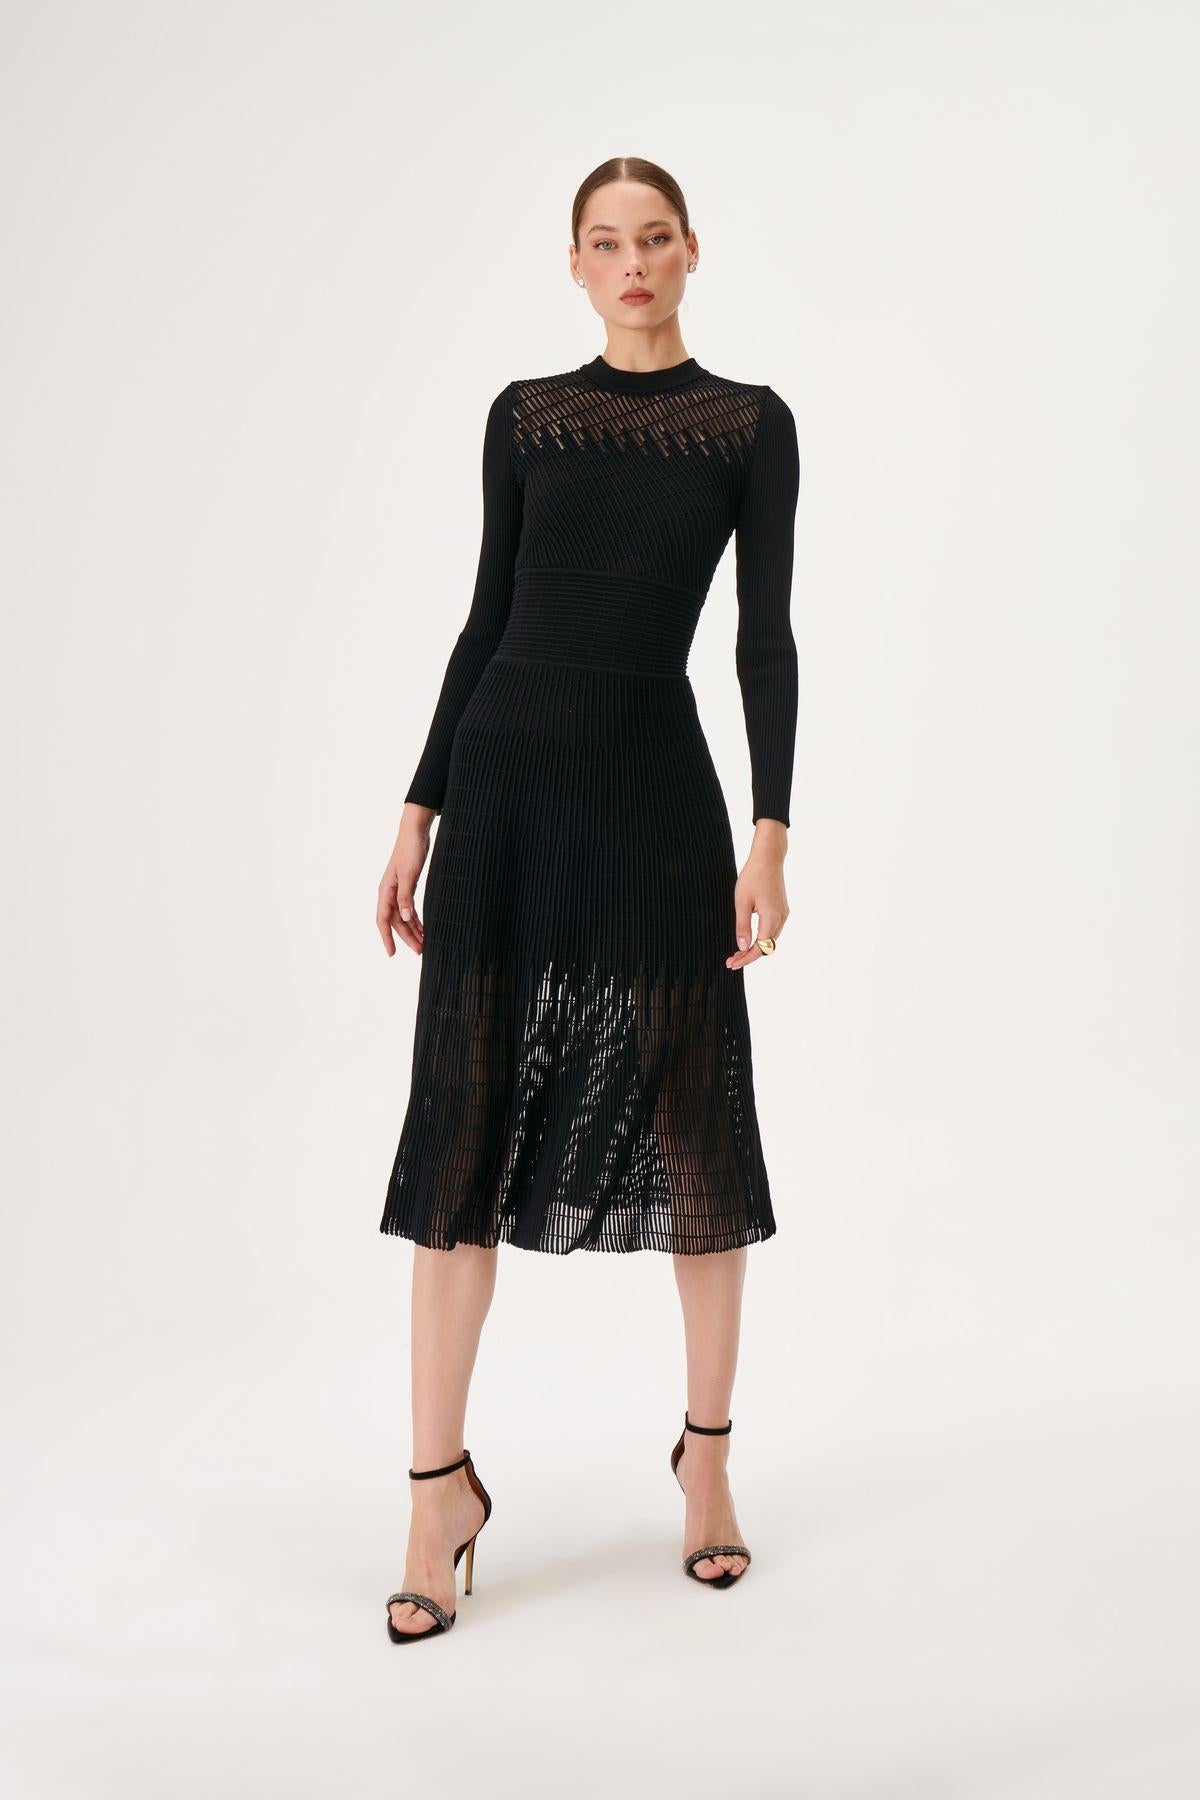 Transparent Detailed Ottoman Knitted Black Knitwear Dress